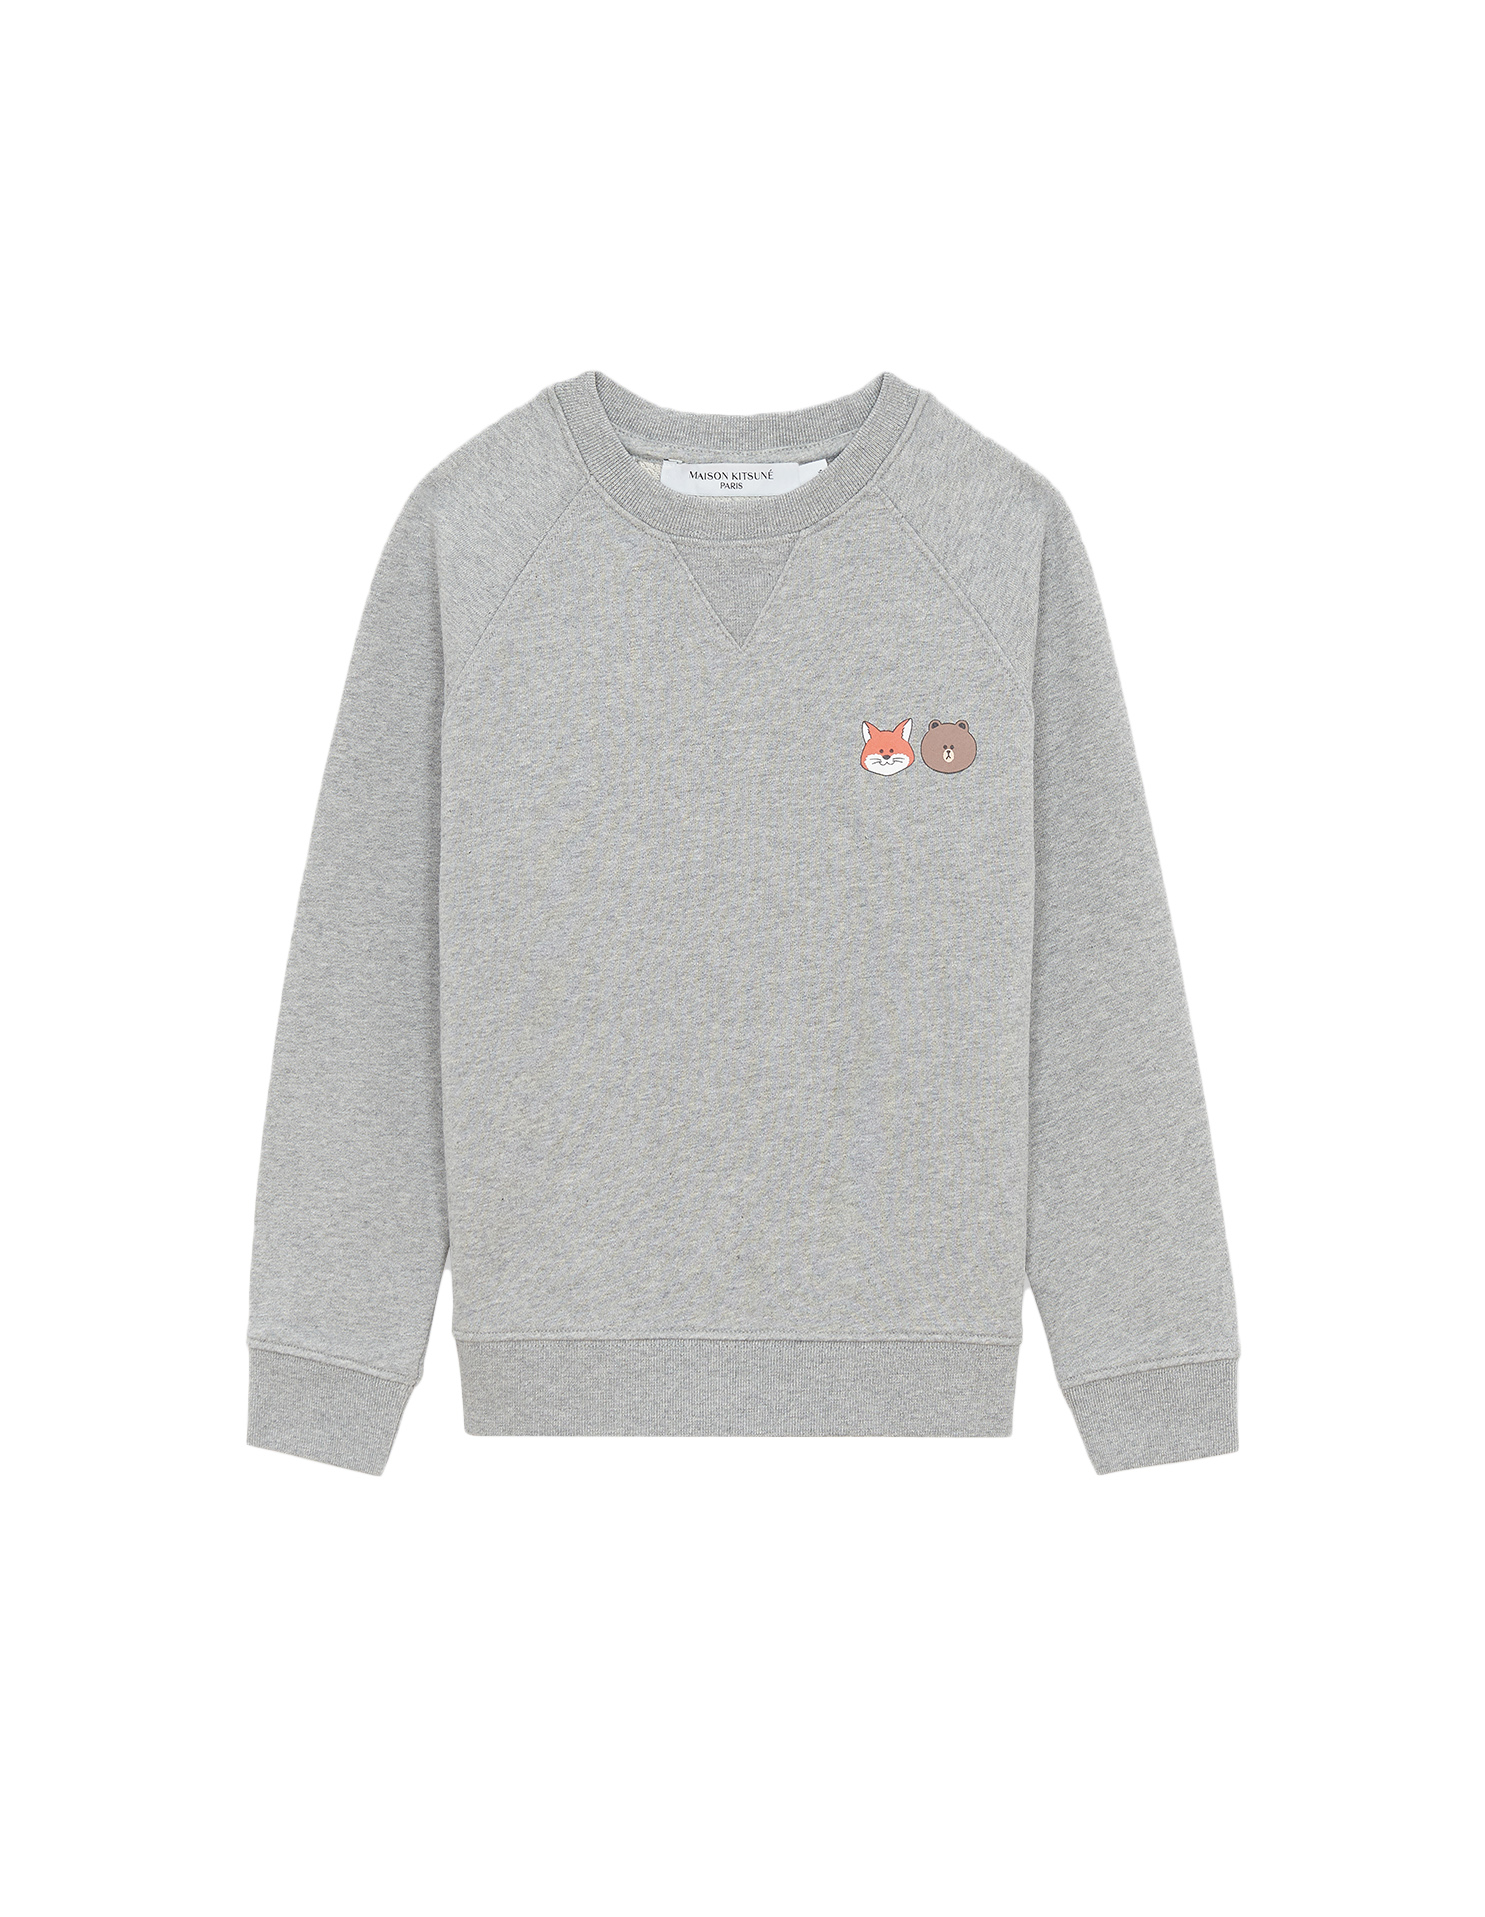 Maison Kitsune x Line Small Print Sweatshirt Grey Melange Kids 